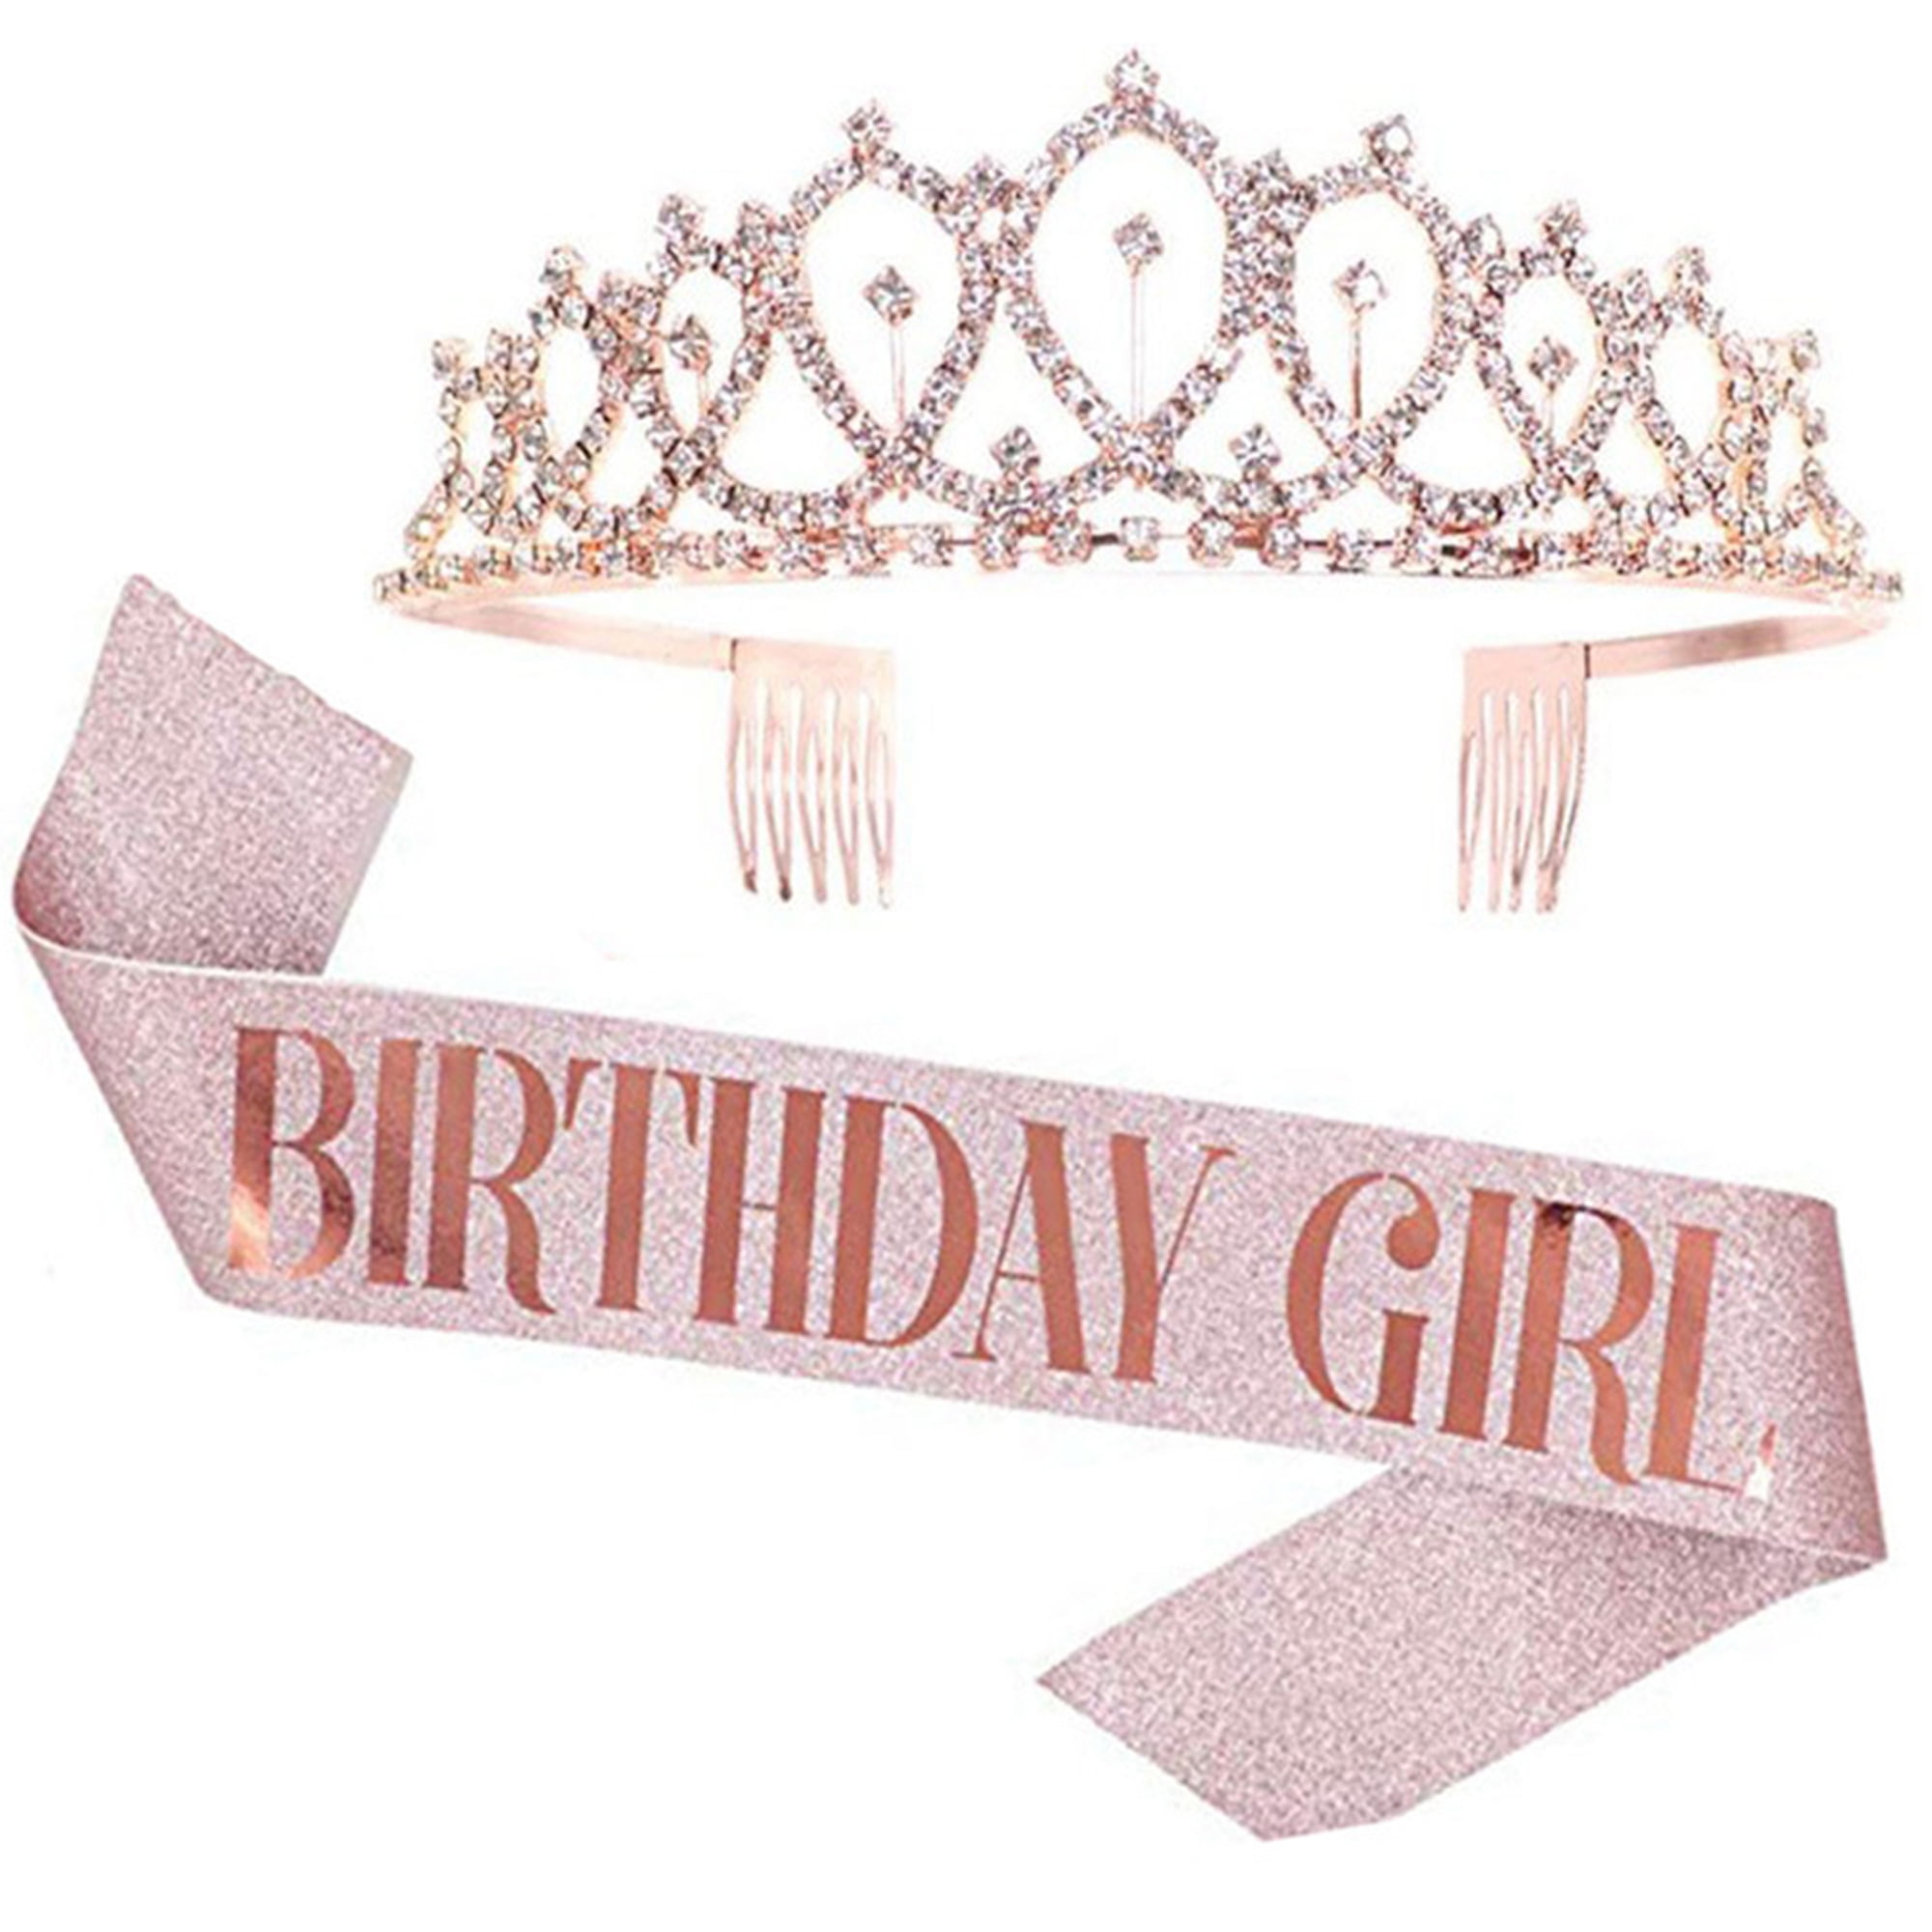 Birthday Girl Sash Tiara Set Happy Birthday Party Decoration Supplies Gift - Walmart.com